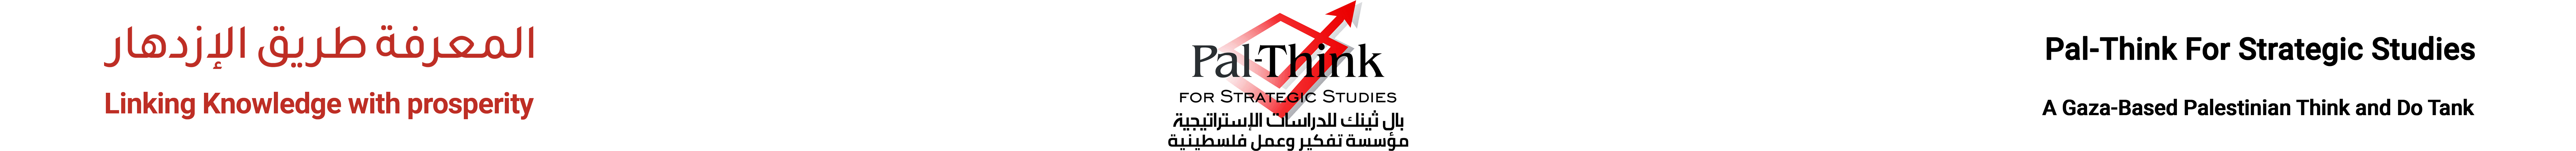 Pal-Think For Strategic Studies